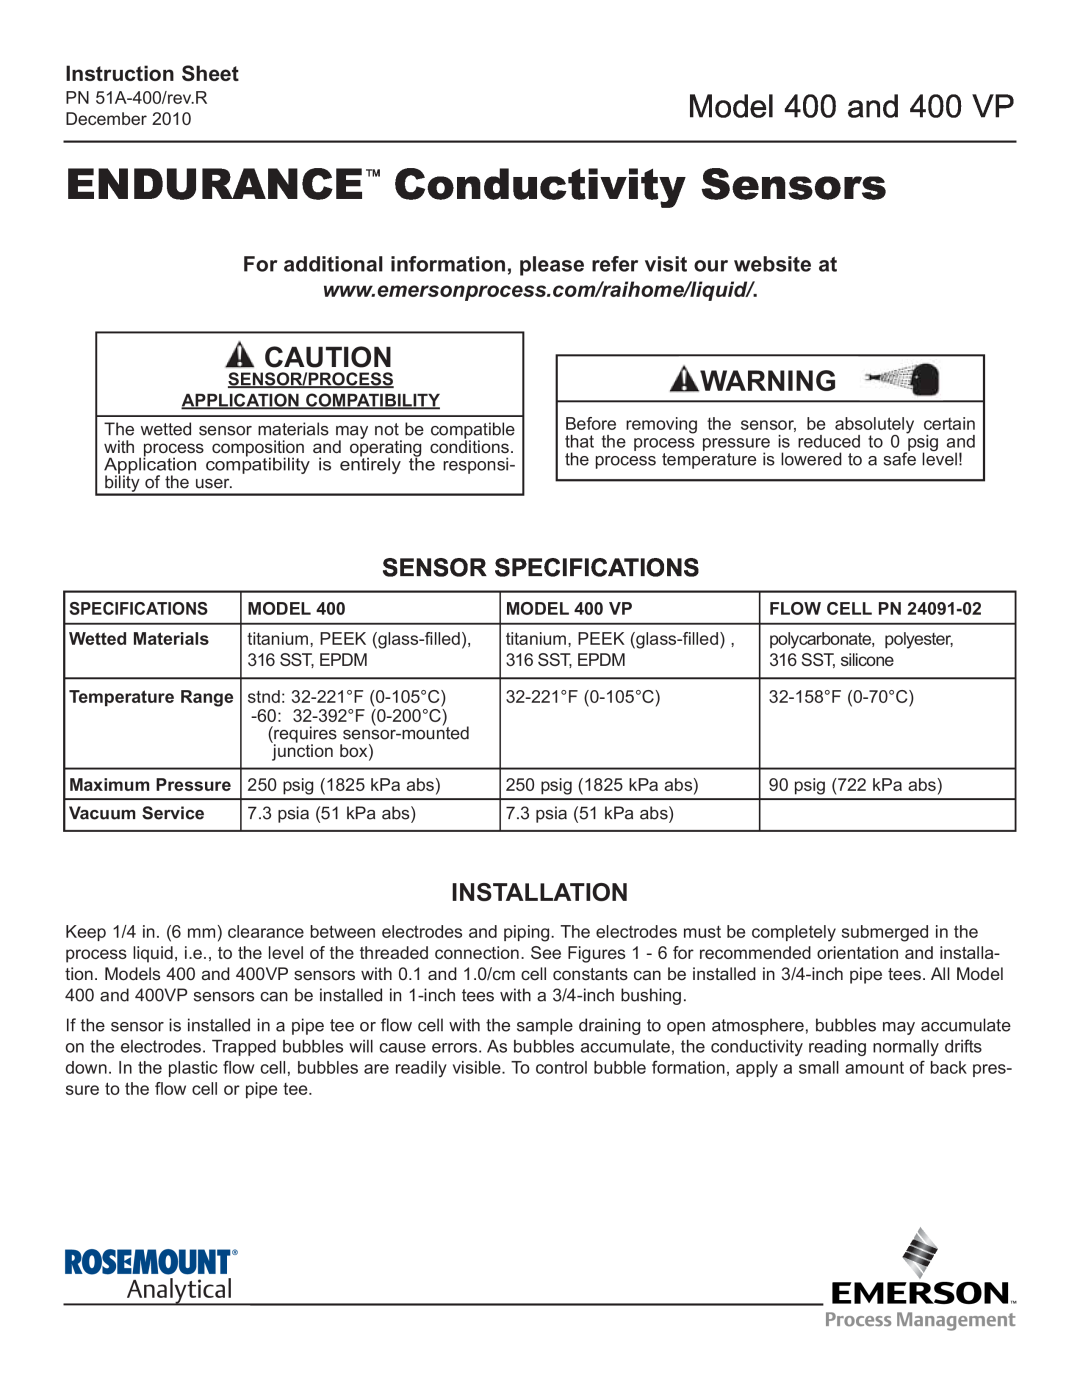 Emerson instruction sheet Sensor Specifications, Installation, Instruction Sheet, Model, MODEL 400 VP, Flow Cell Pn 